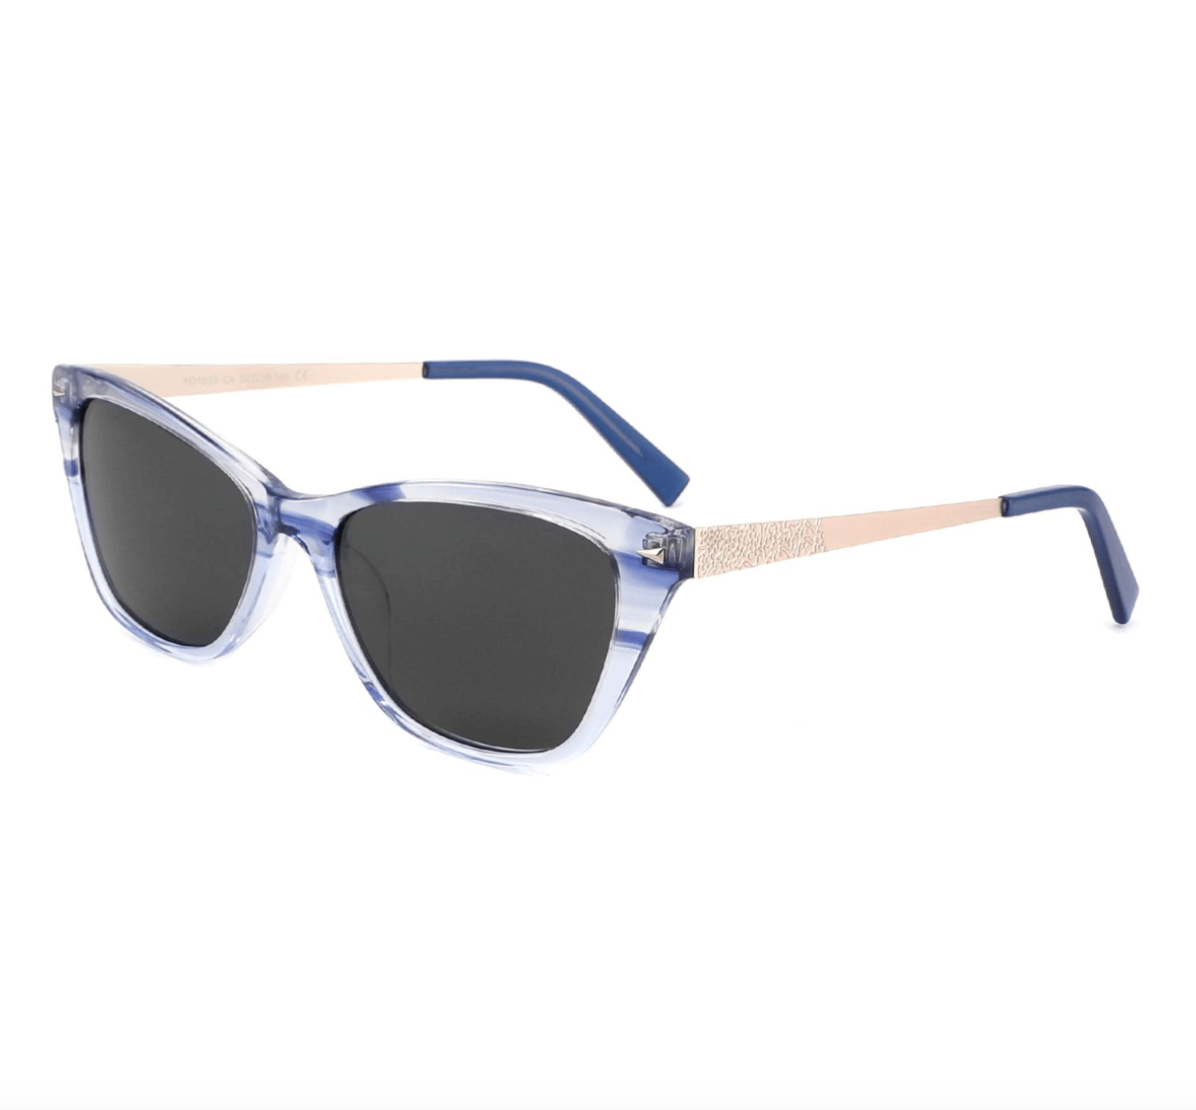 cat eye glasses bulk, wholesale cat eye sunglasses, Sunglasses Manufacturer, sunglasses supplier, sunglasses factory in China